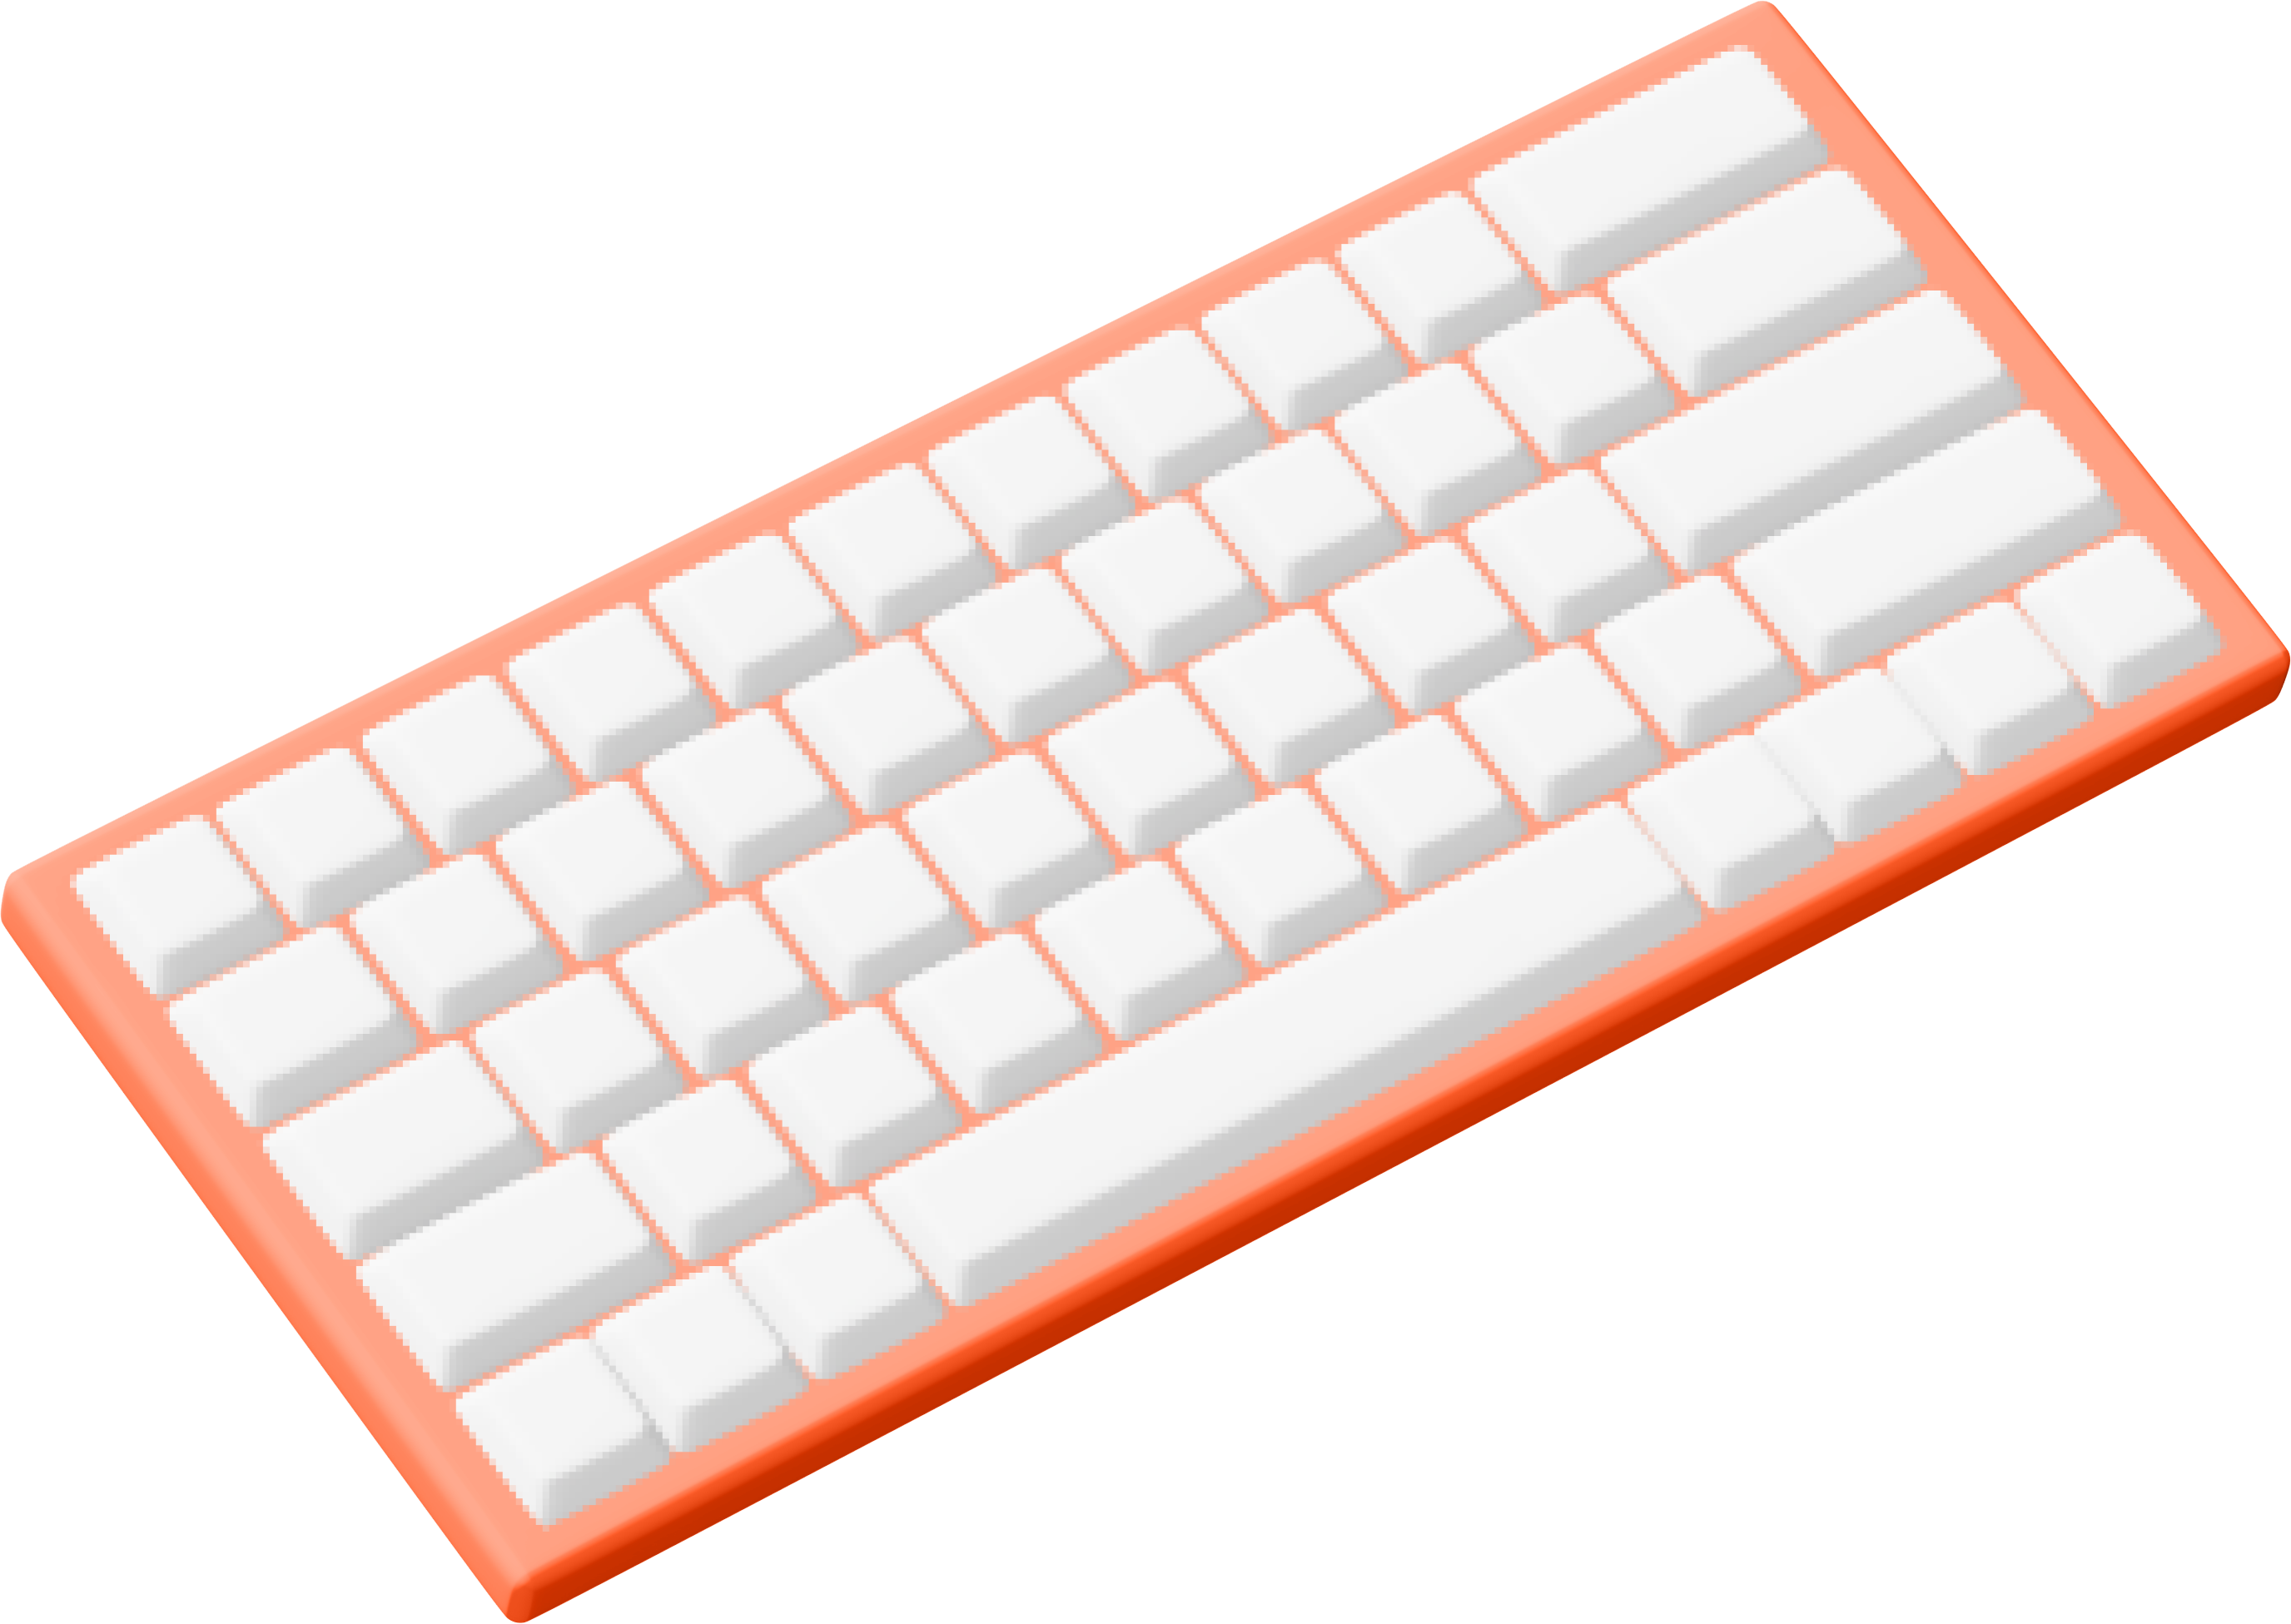 keyboard illustration